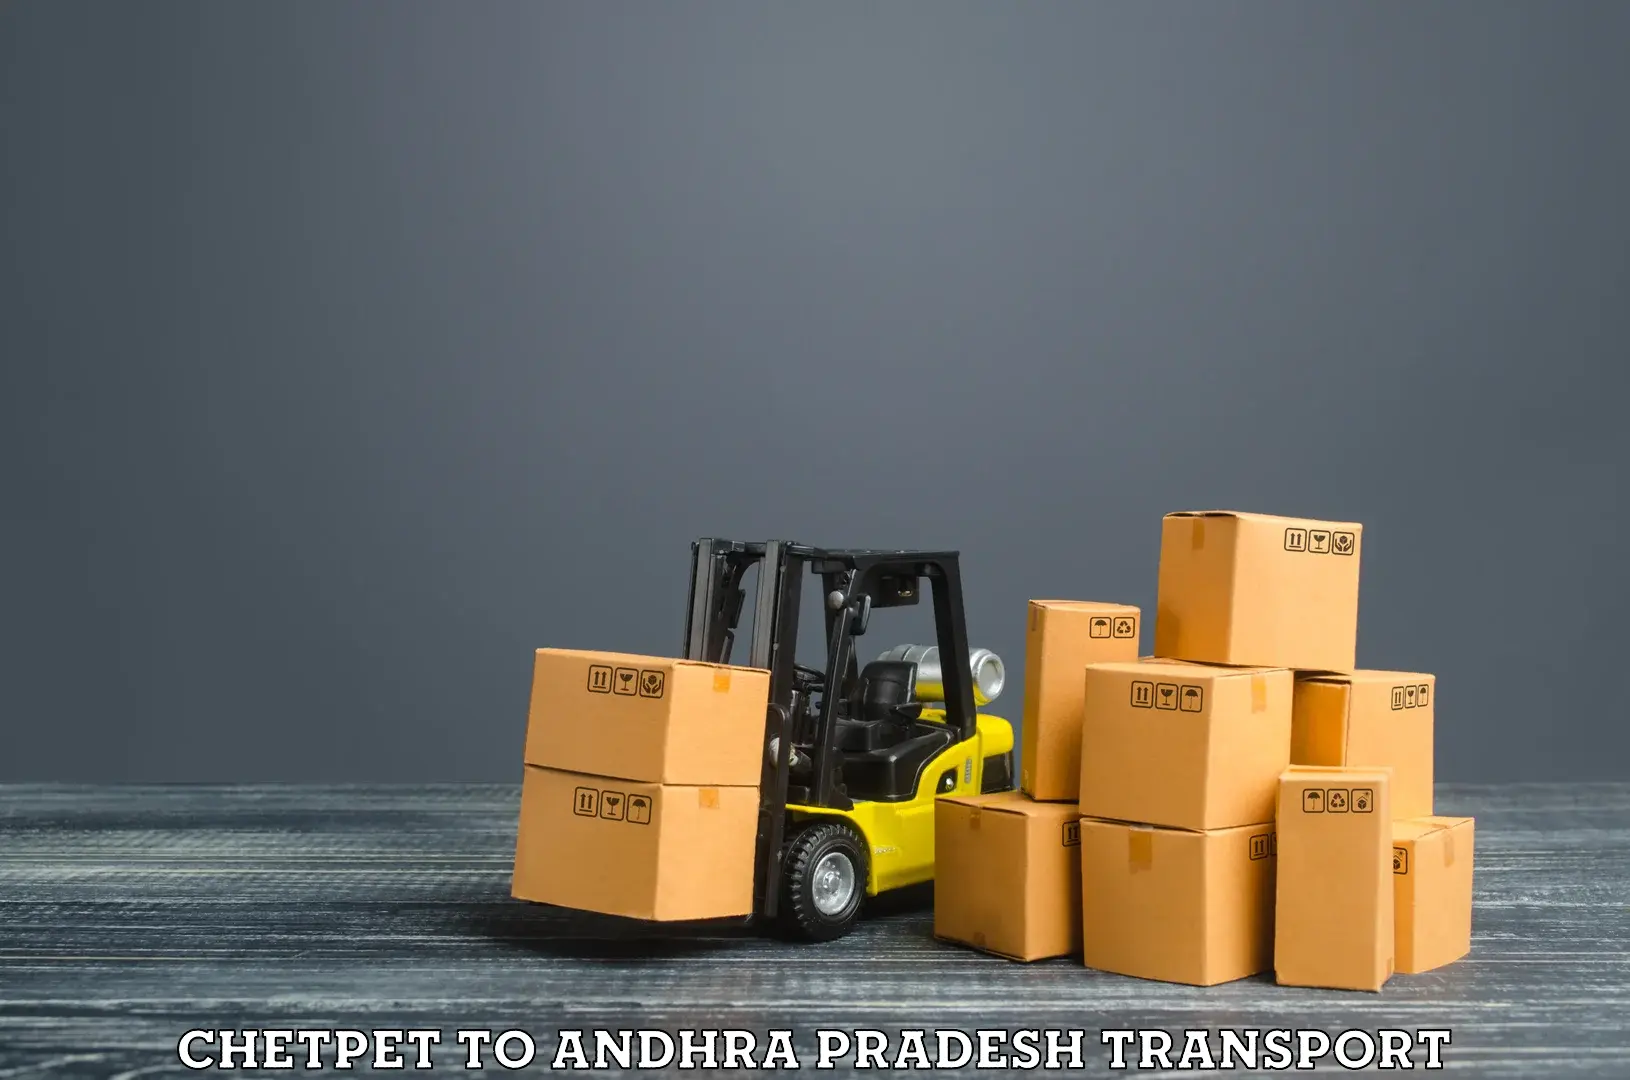 Transport in sharing Chetpet to Andhra Pradesh